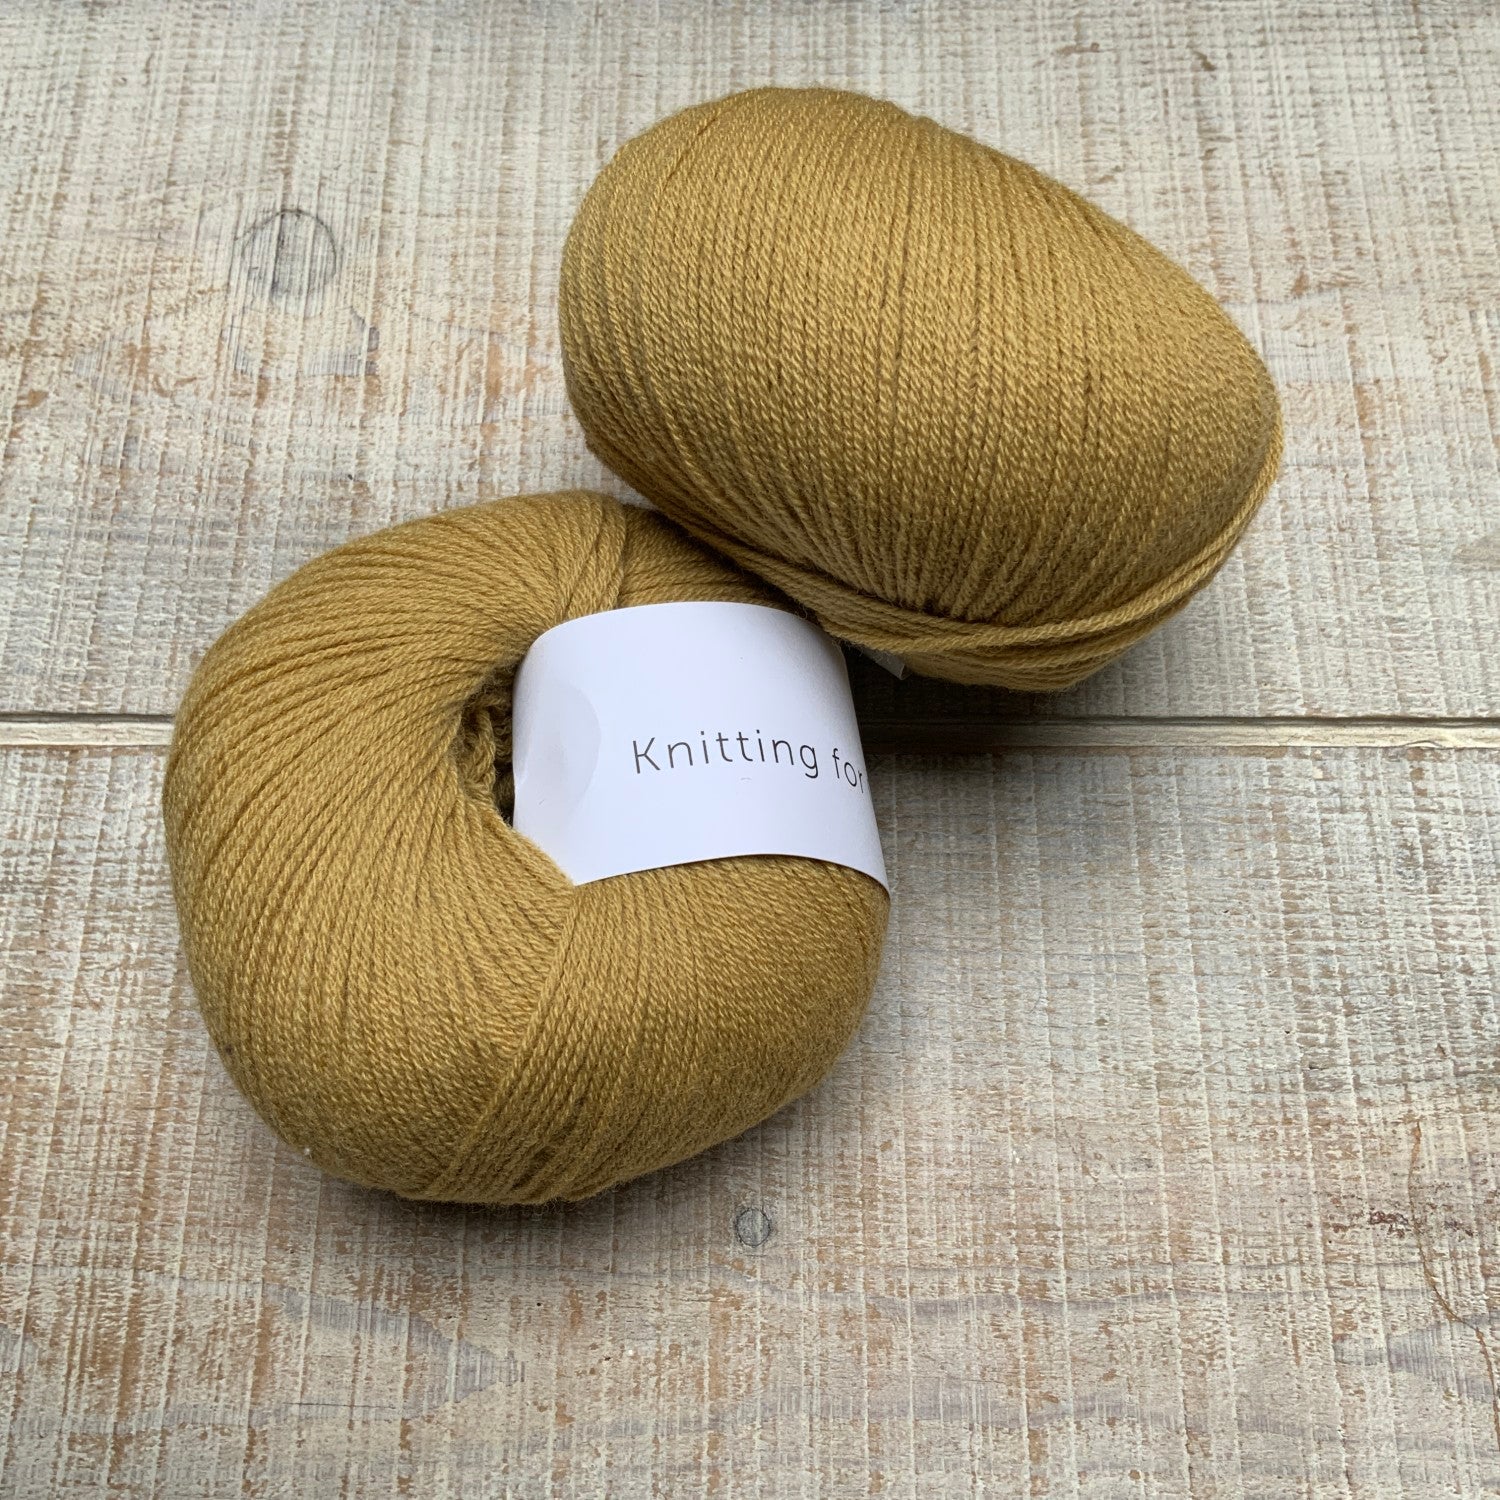 Knitting for Olive Merino – A Yarn Story